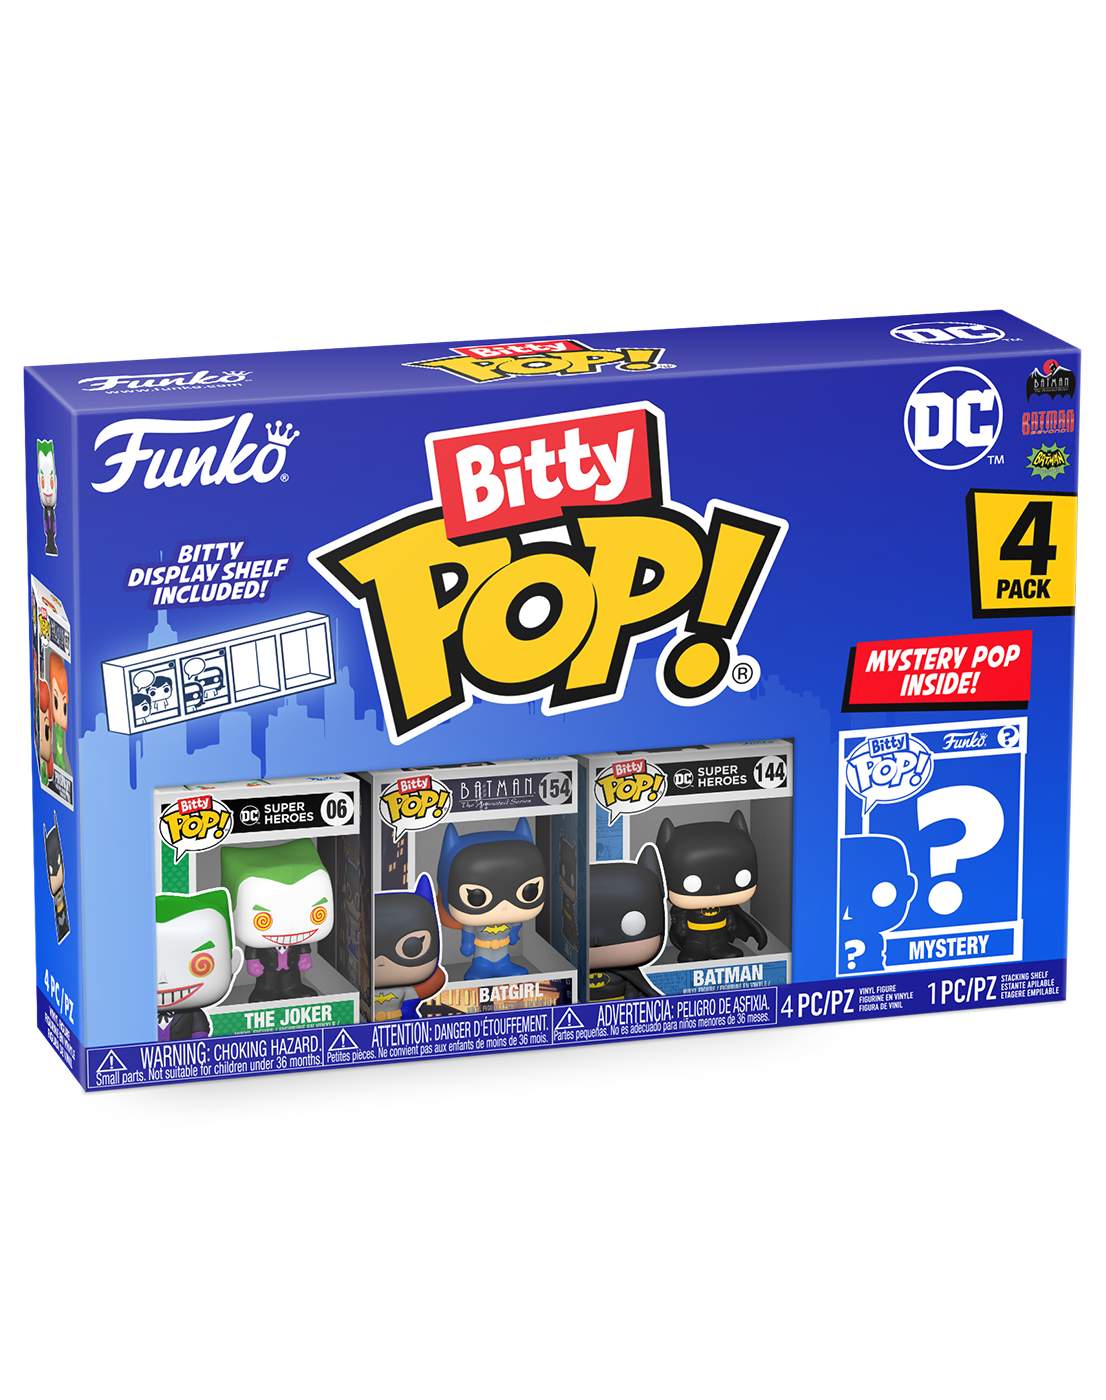 Funko Bitty Pop! DC Comics Vinyl Figures - Series 2; image 1 of 5